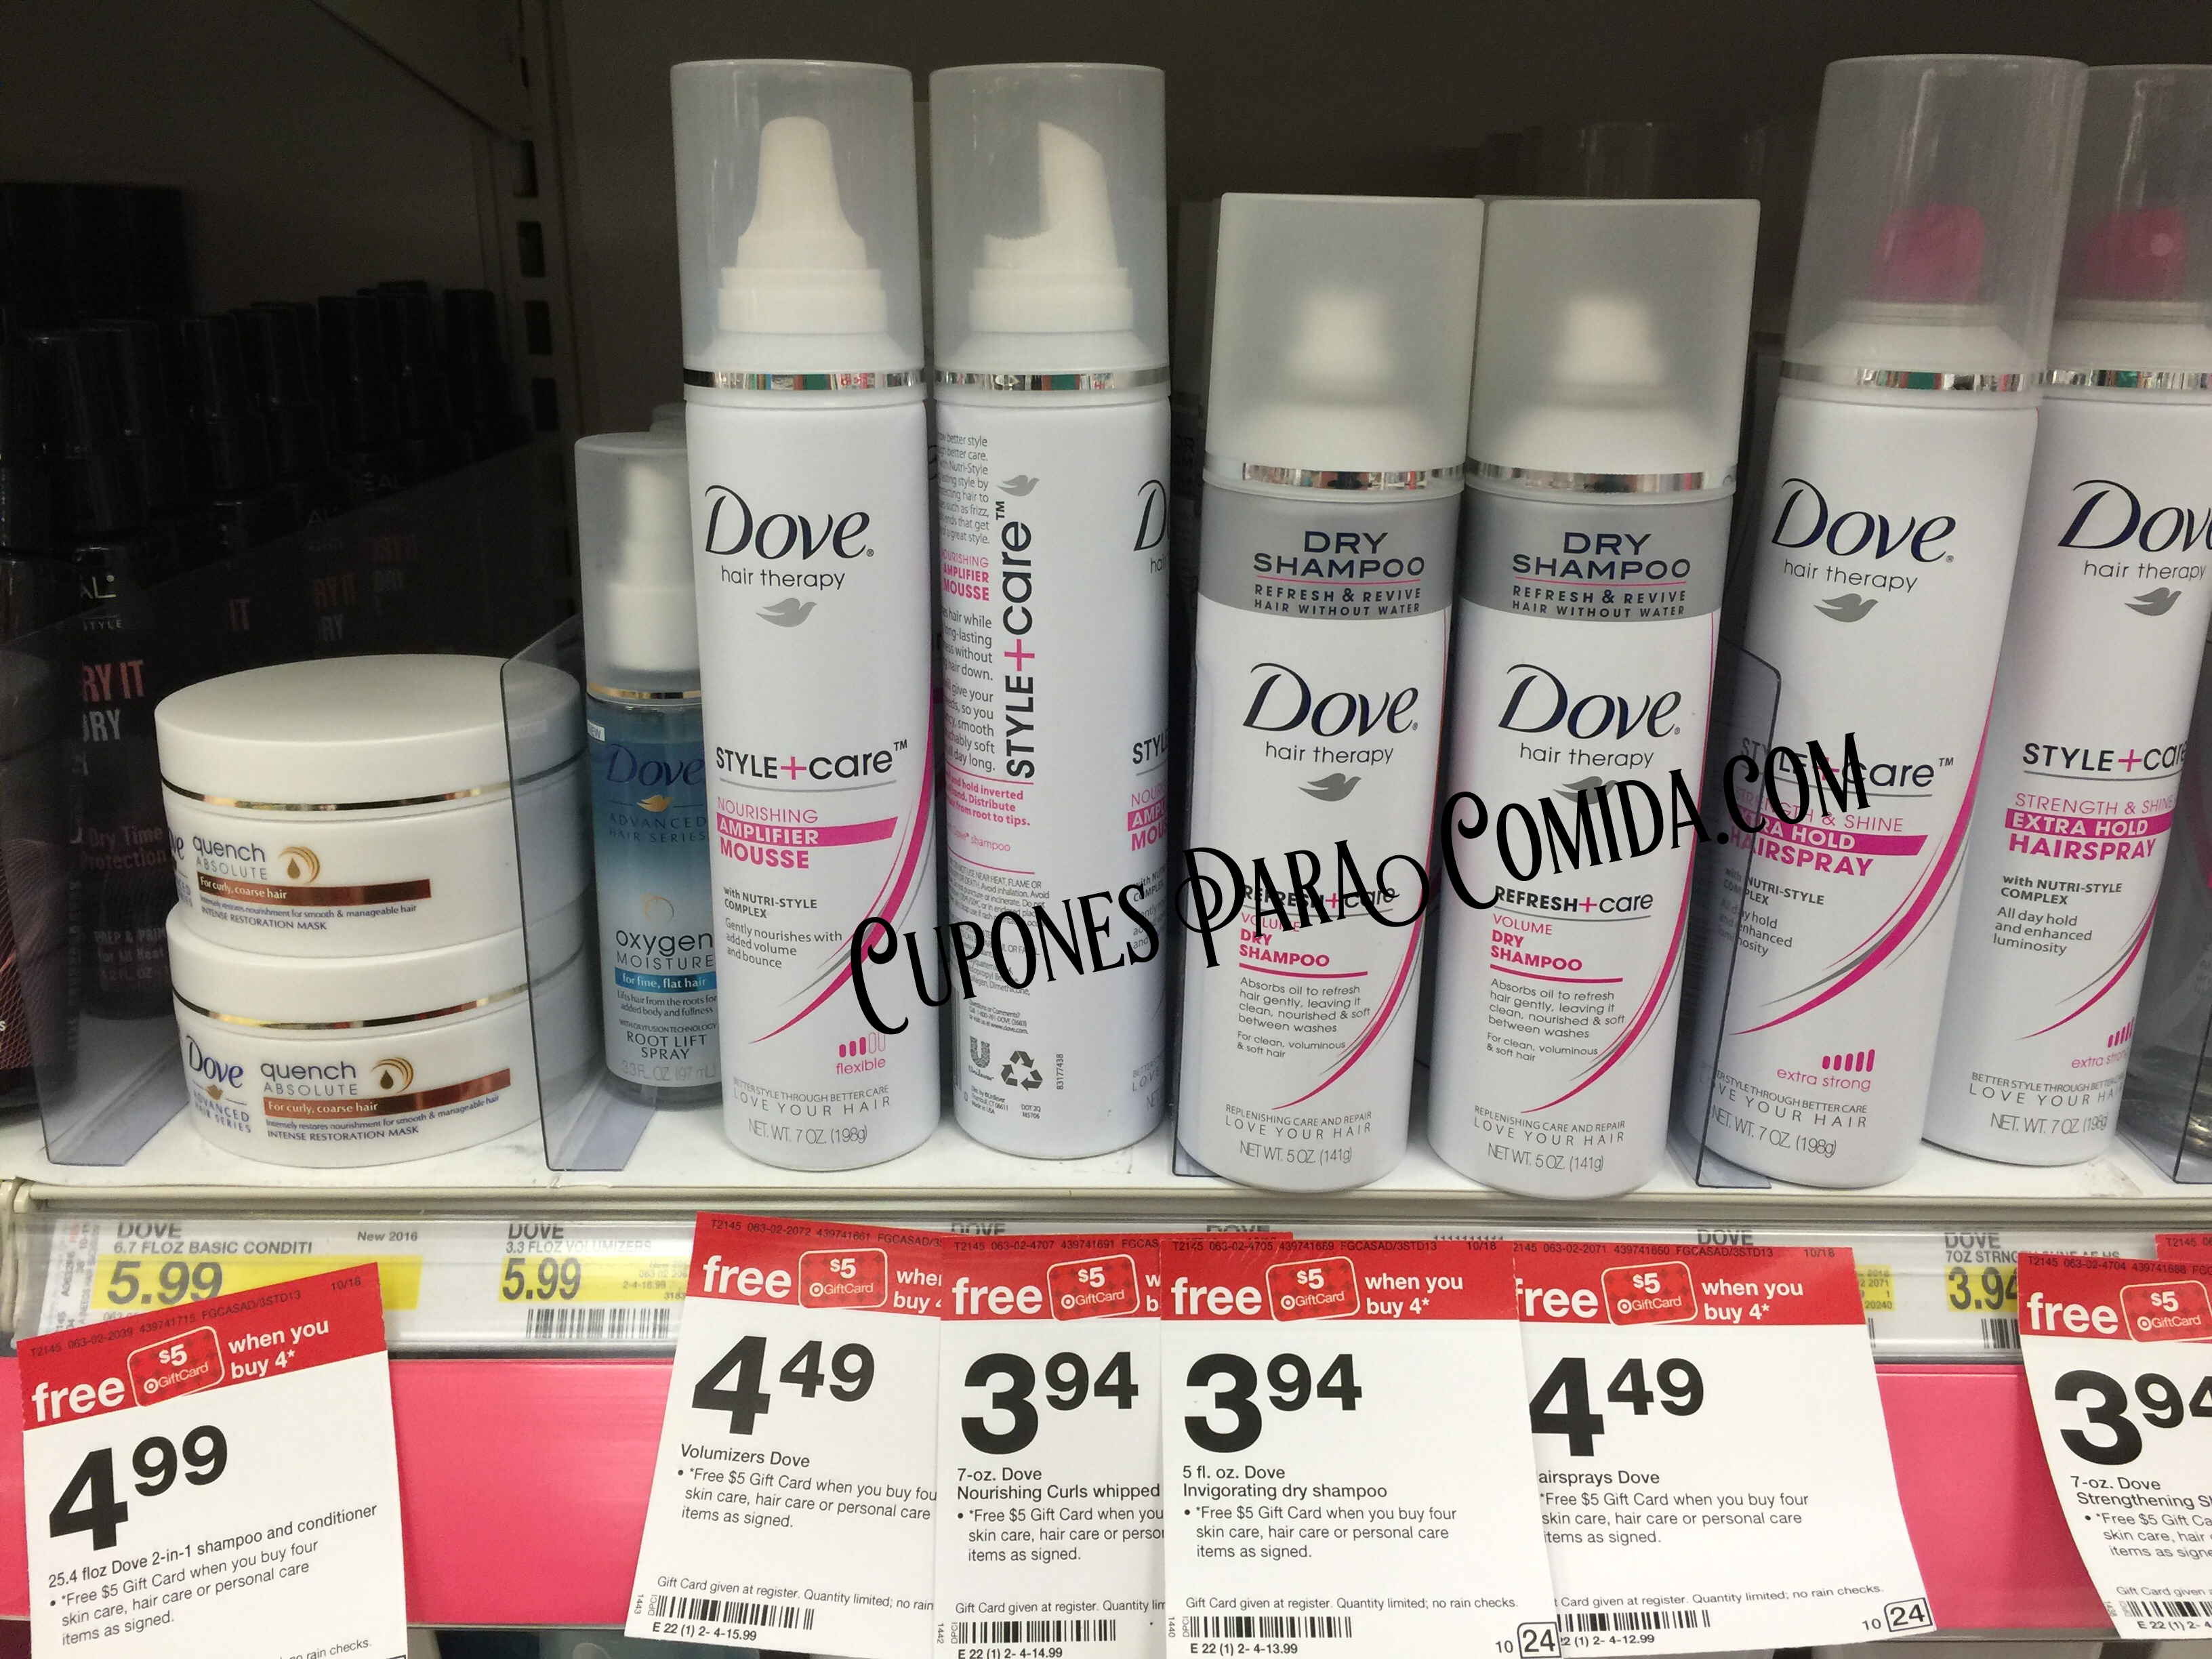 Dove dry shampoo 10/20/15